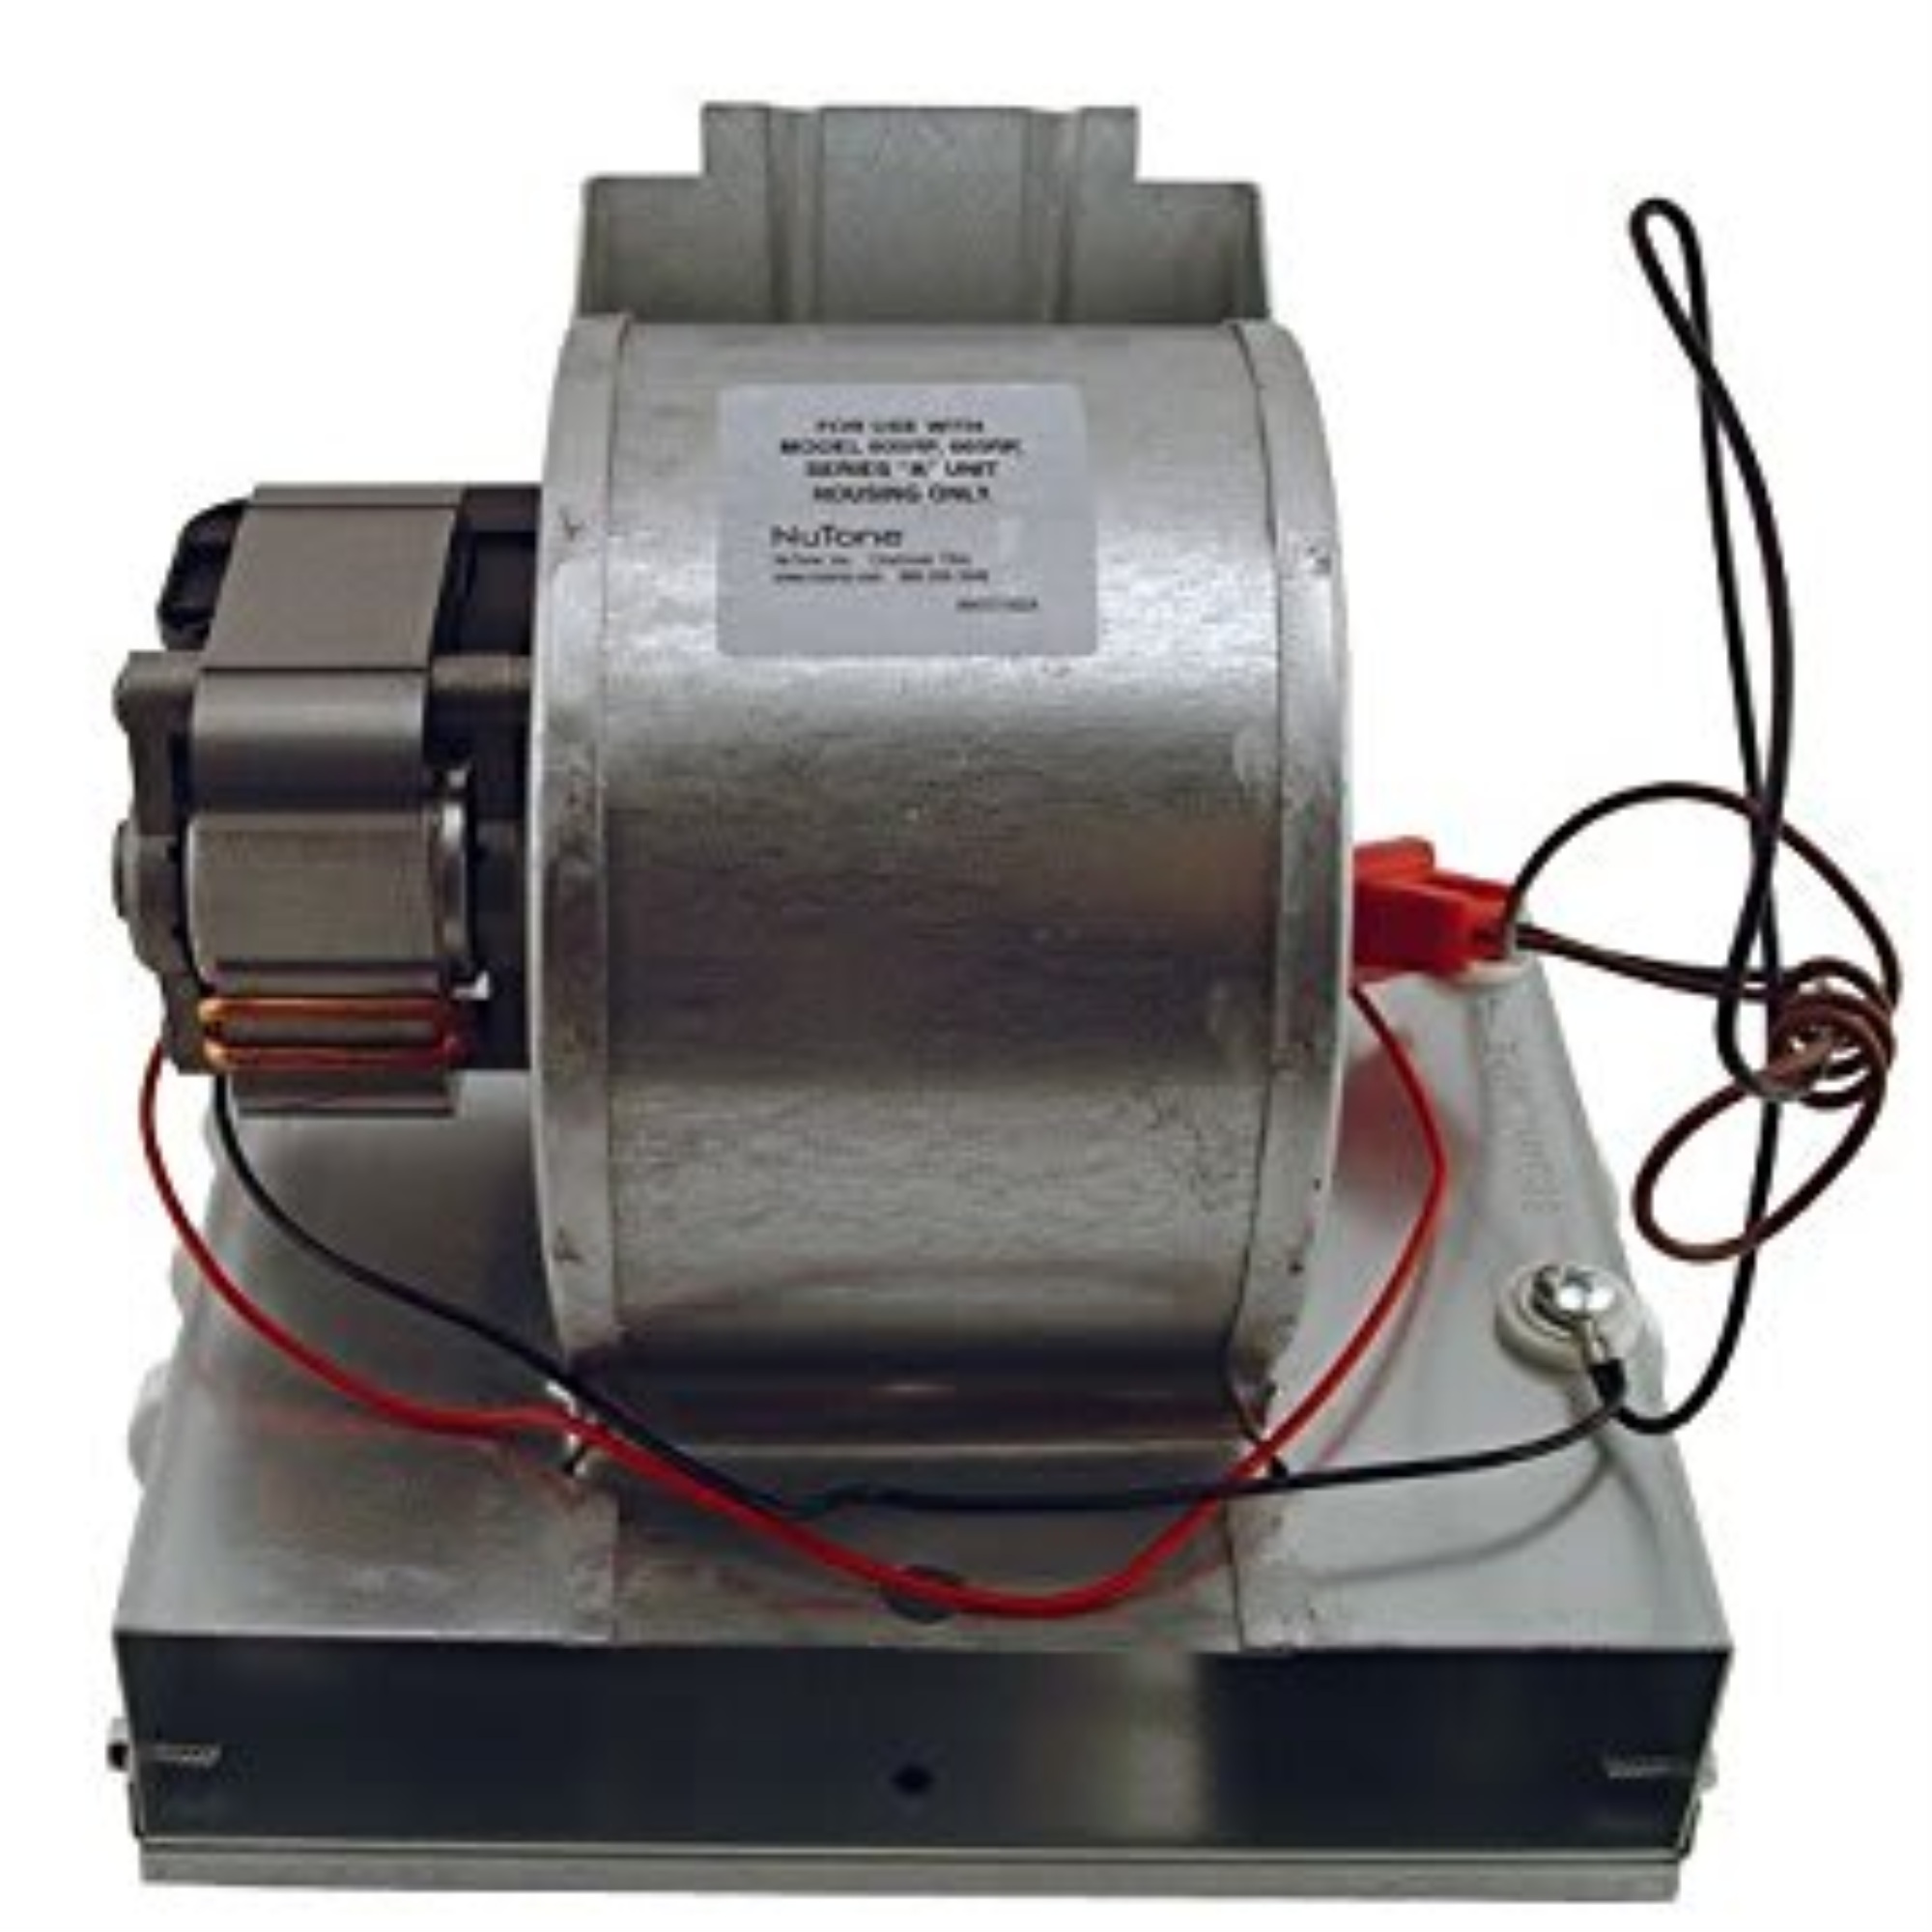 Broan NuTone S97017648 Heater Motor Assembly